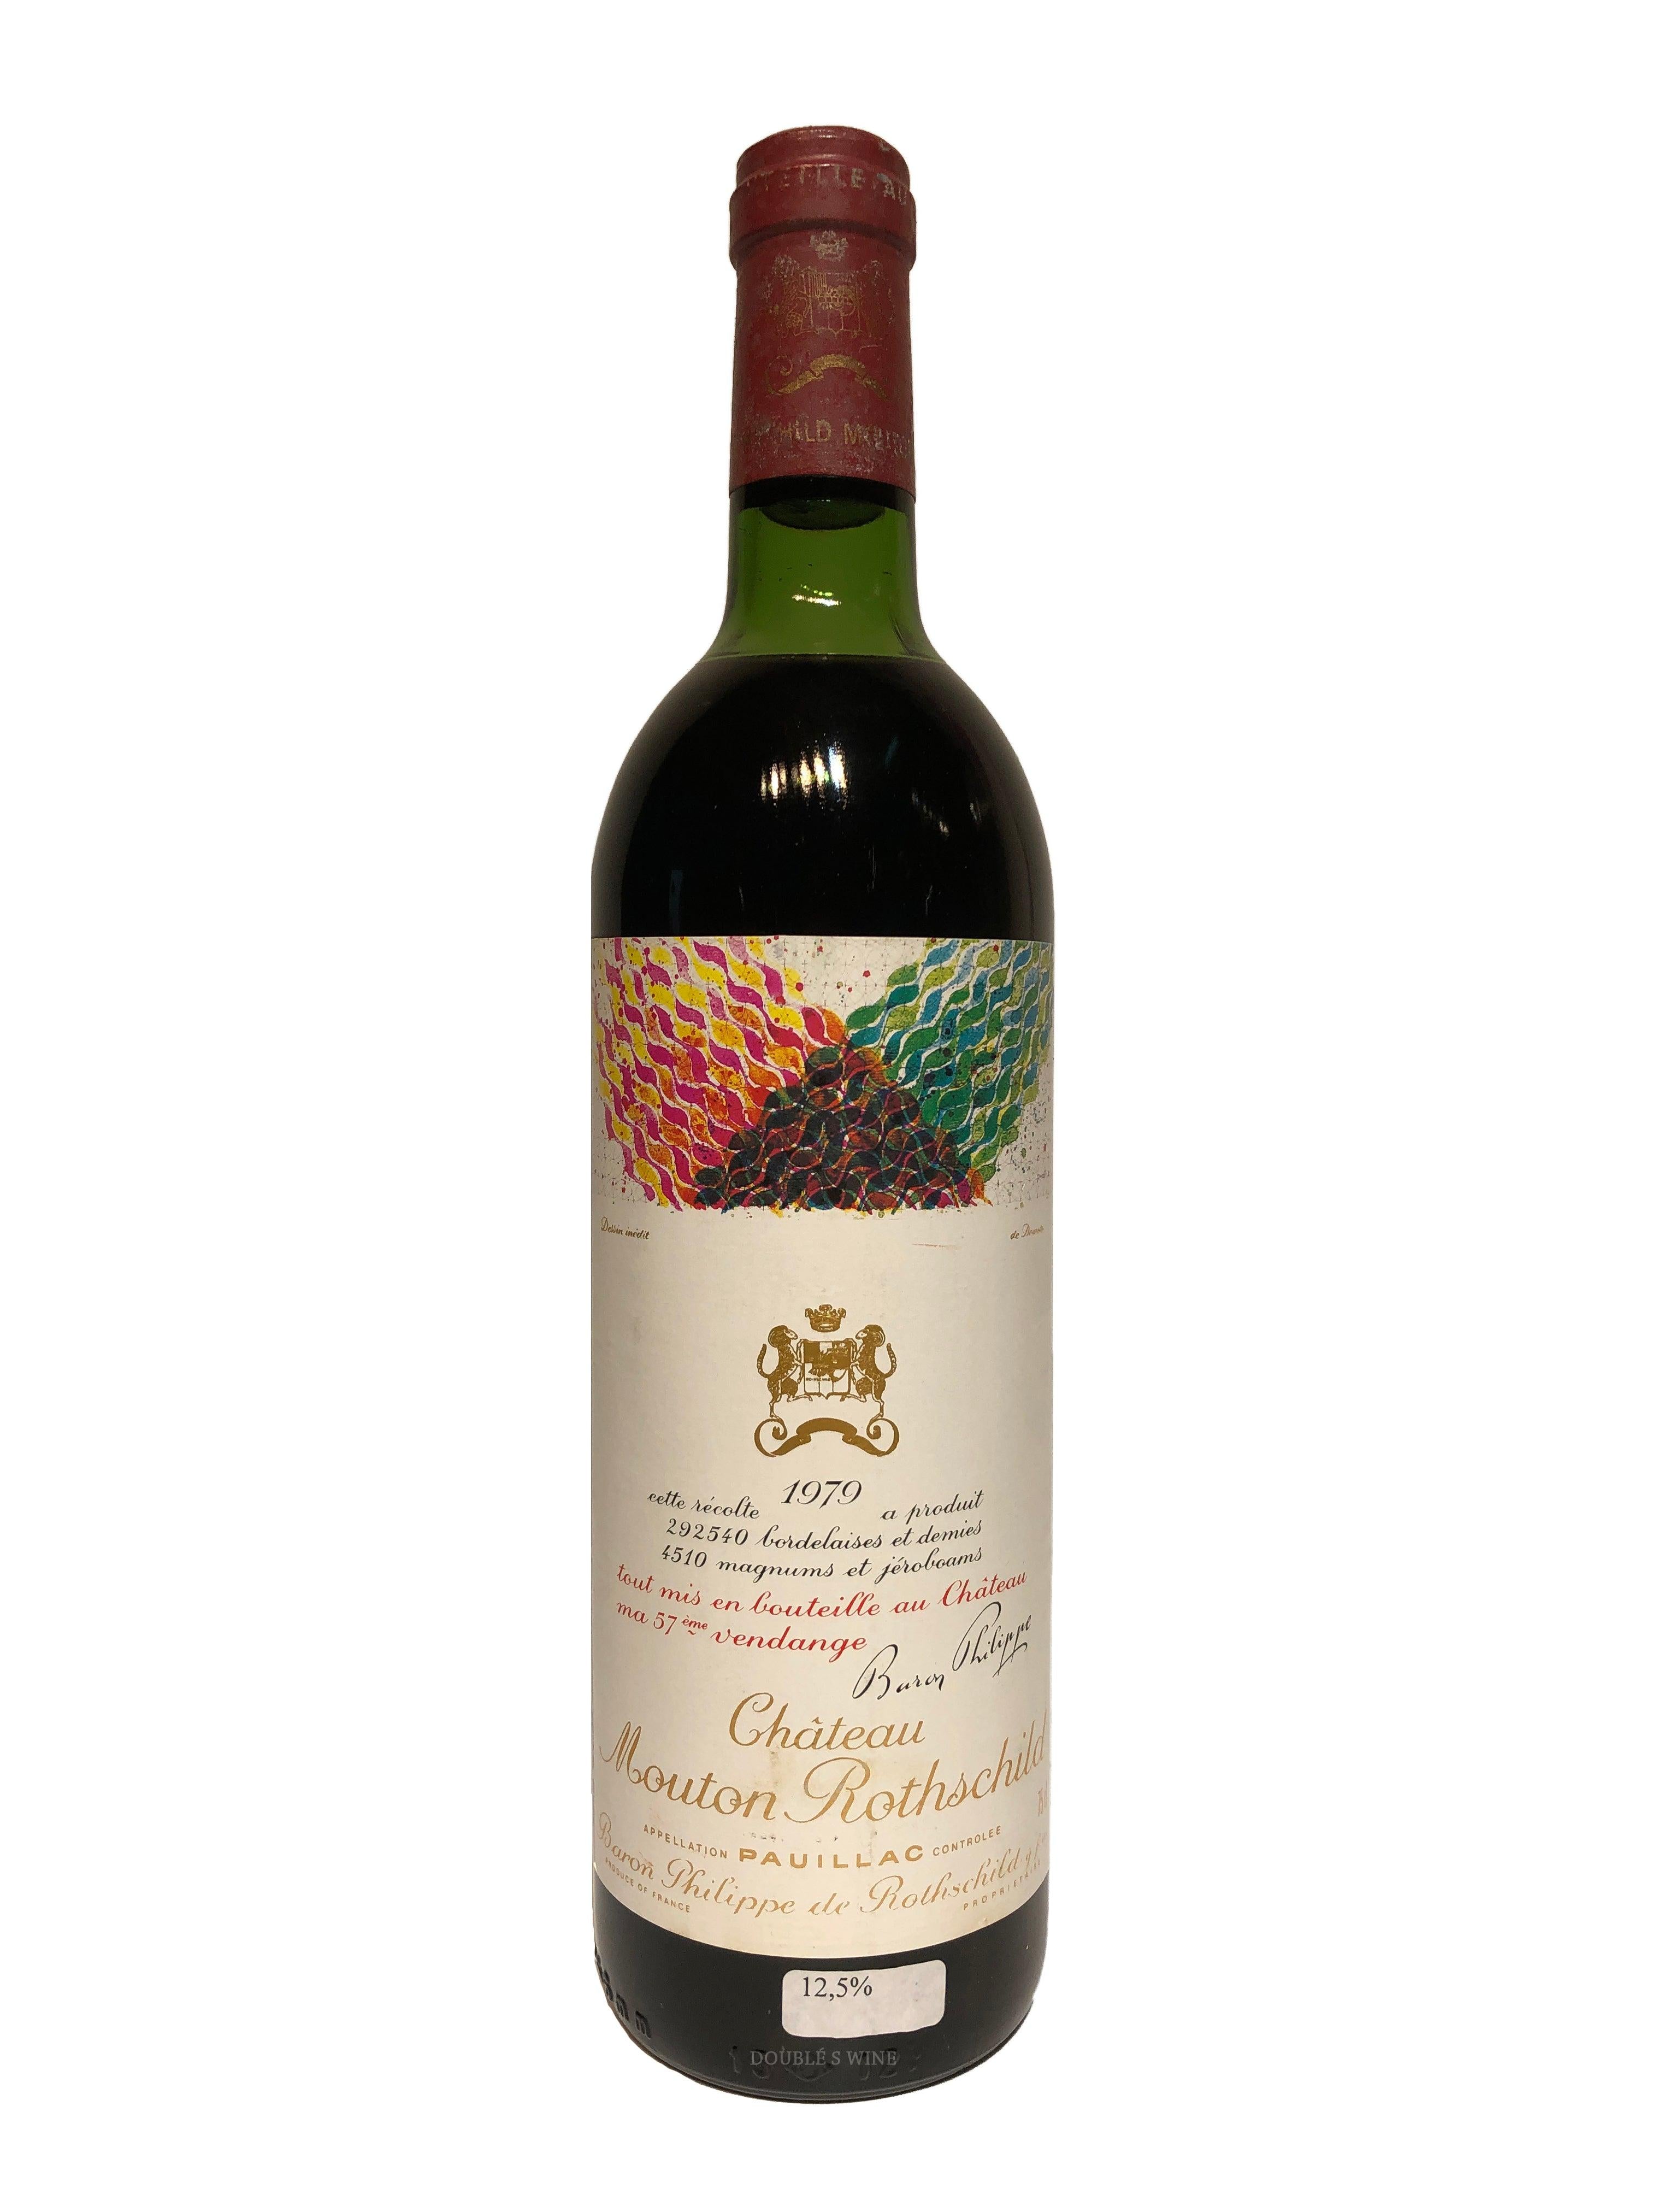 Château Mouton Rothschild 1979 (WS96) - Double S Wine 